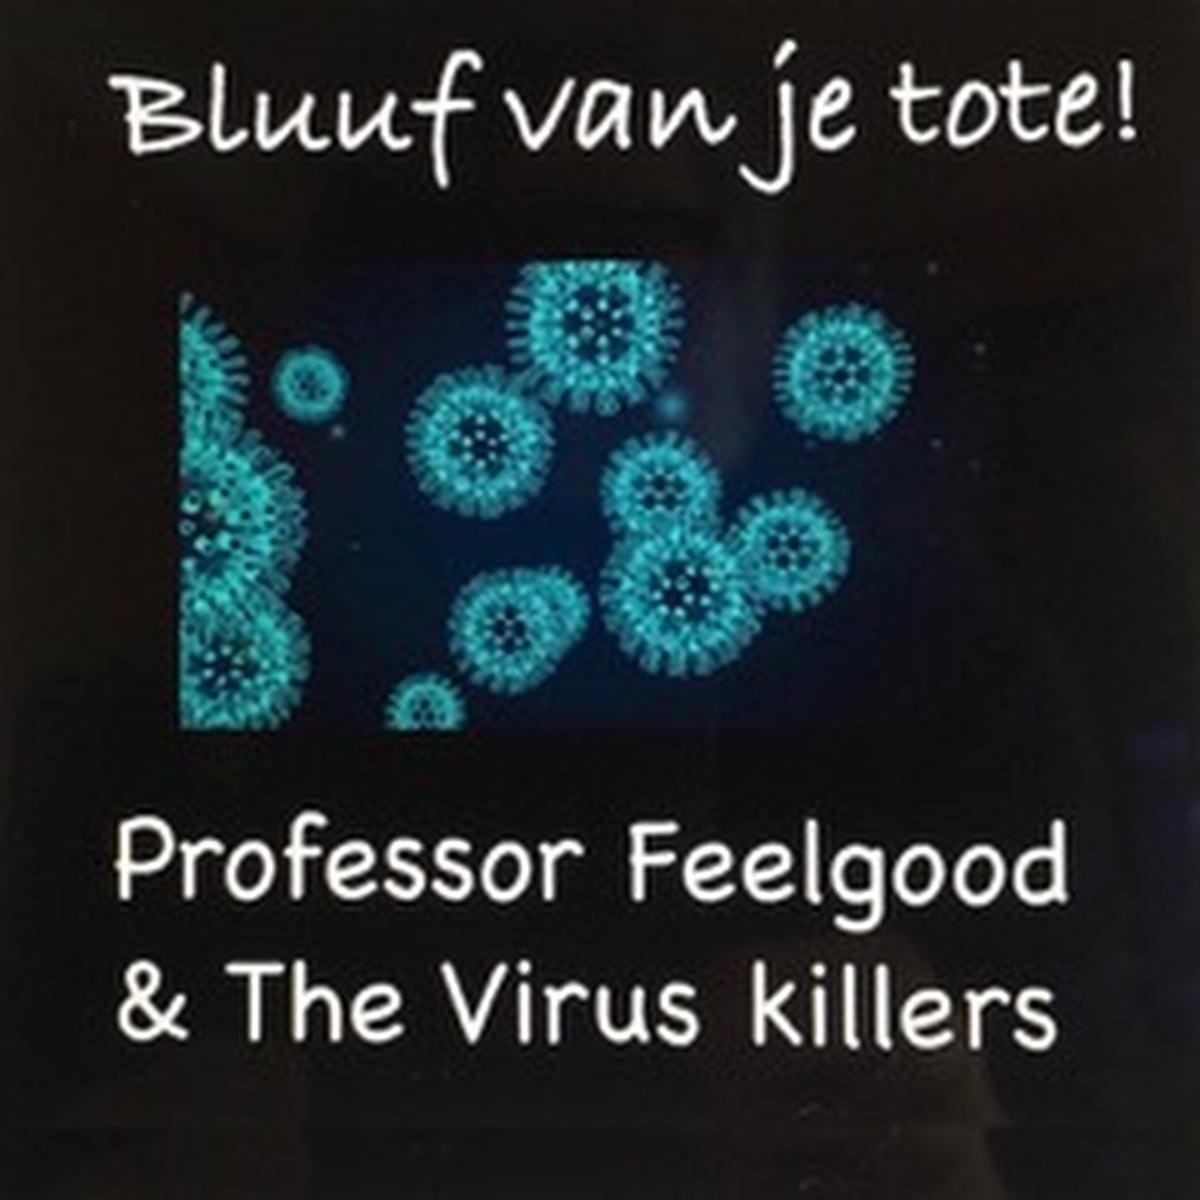 Professor Feelgood & The Virus Killers dragen 'Bluuf van je tote ! op aan alle zorgmedewerkers